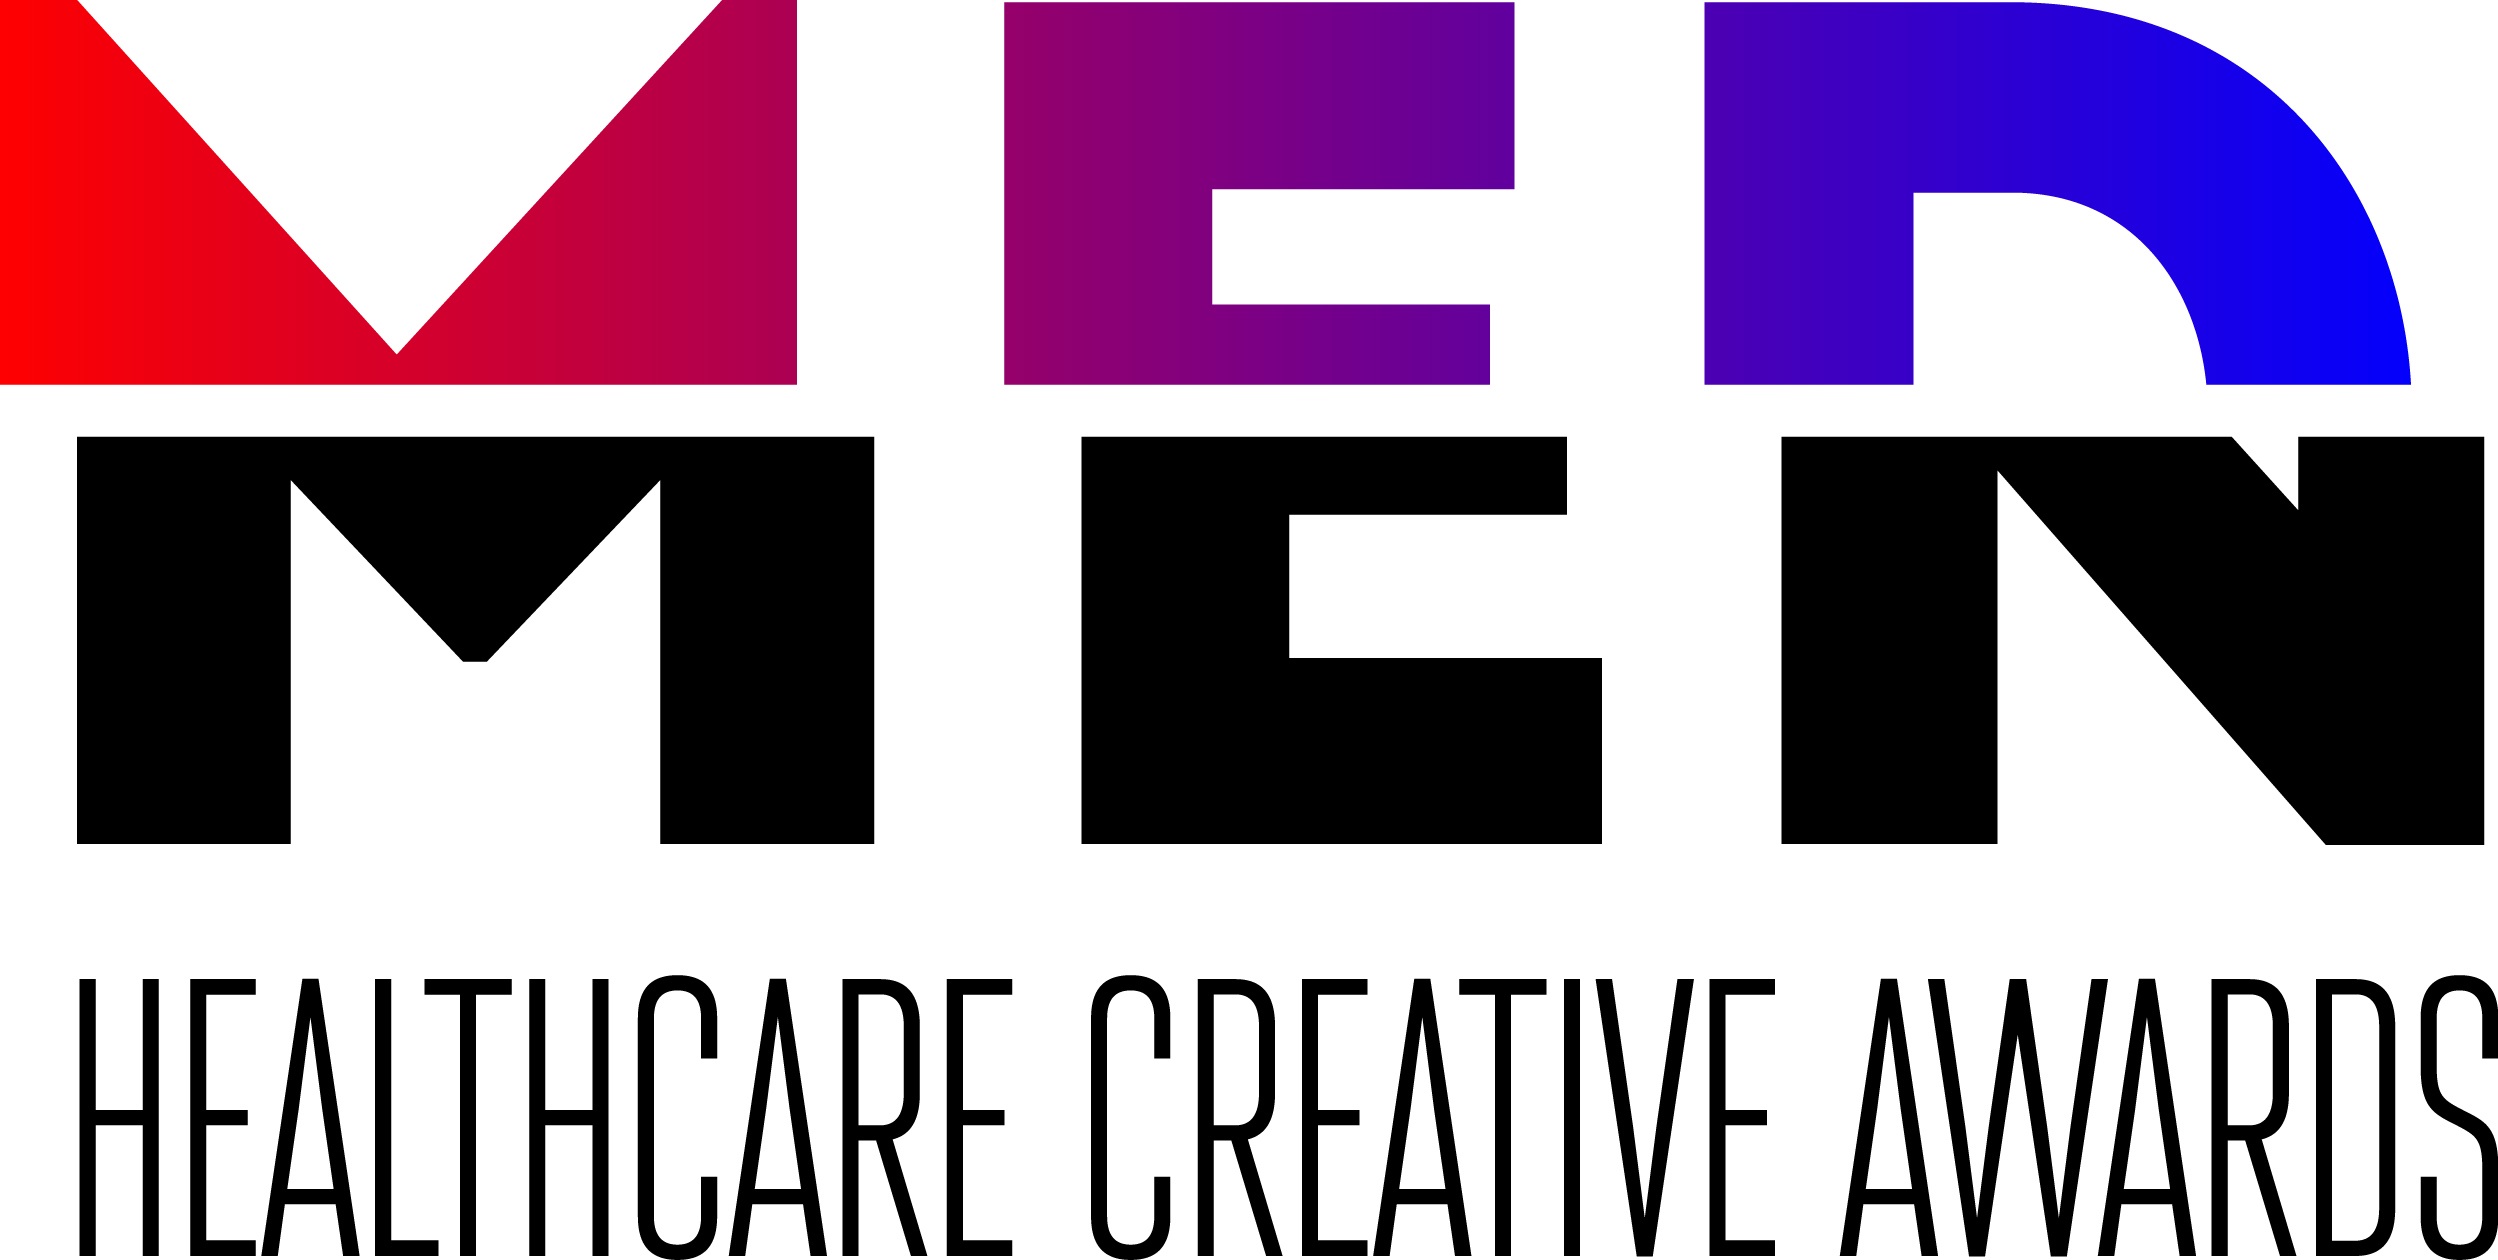   MEDMEN HEALTHCARE CREATIVE AWARDS 2021